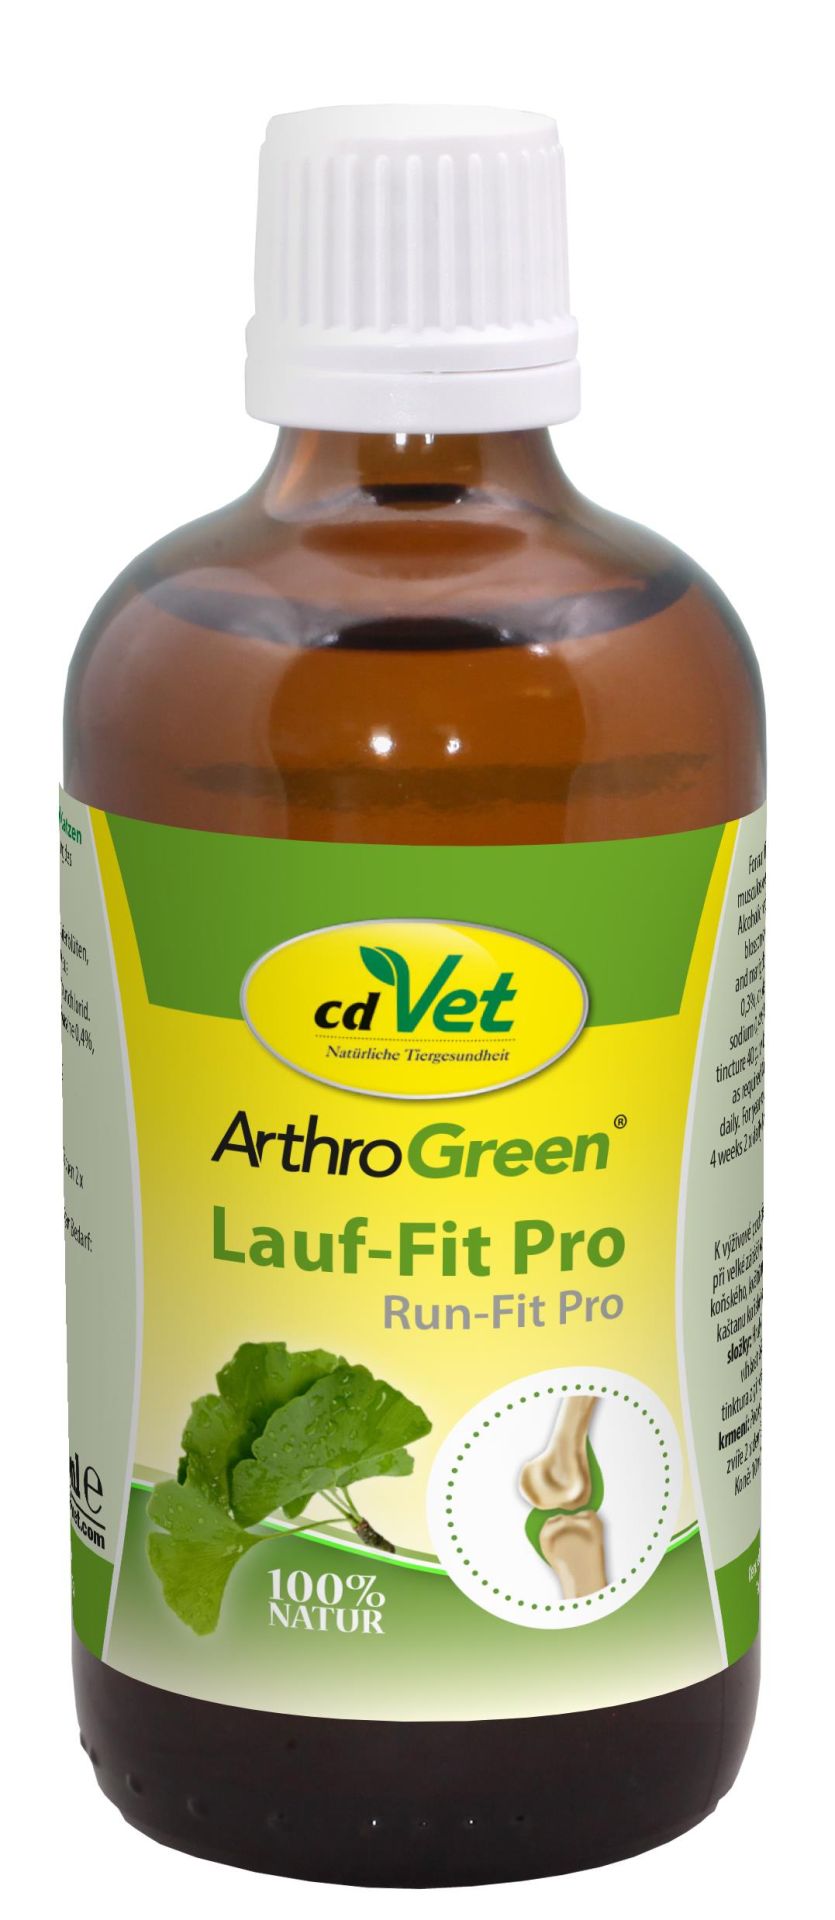 ArthroGreen Lauf-Fit Pro